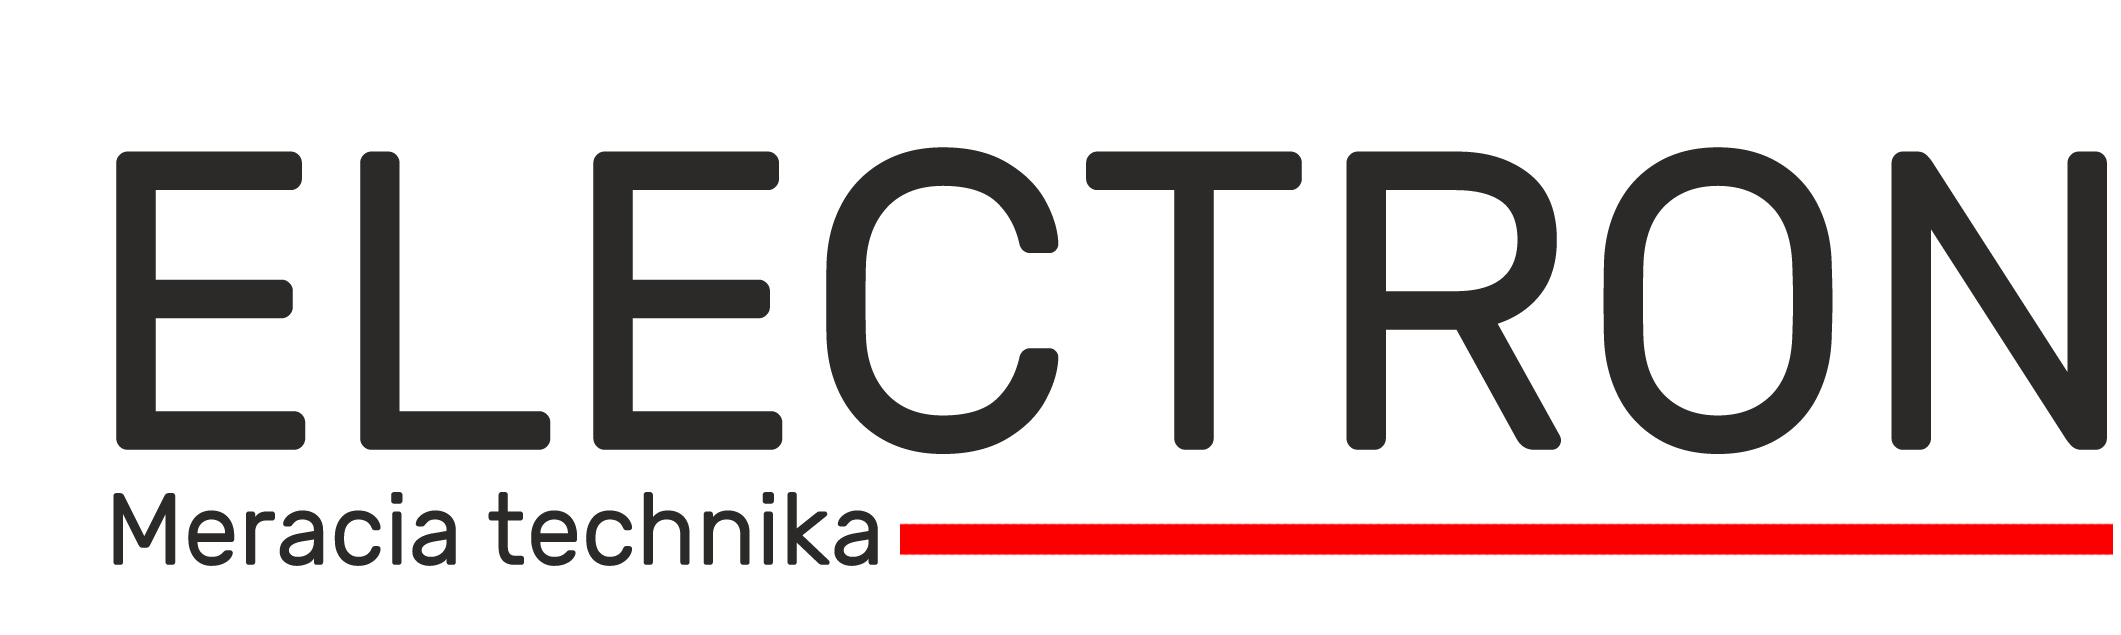 electron-logo